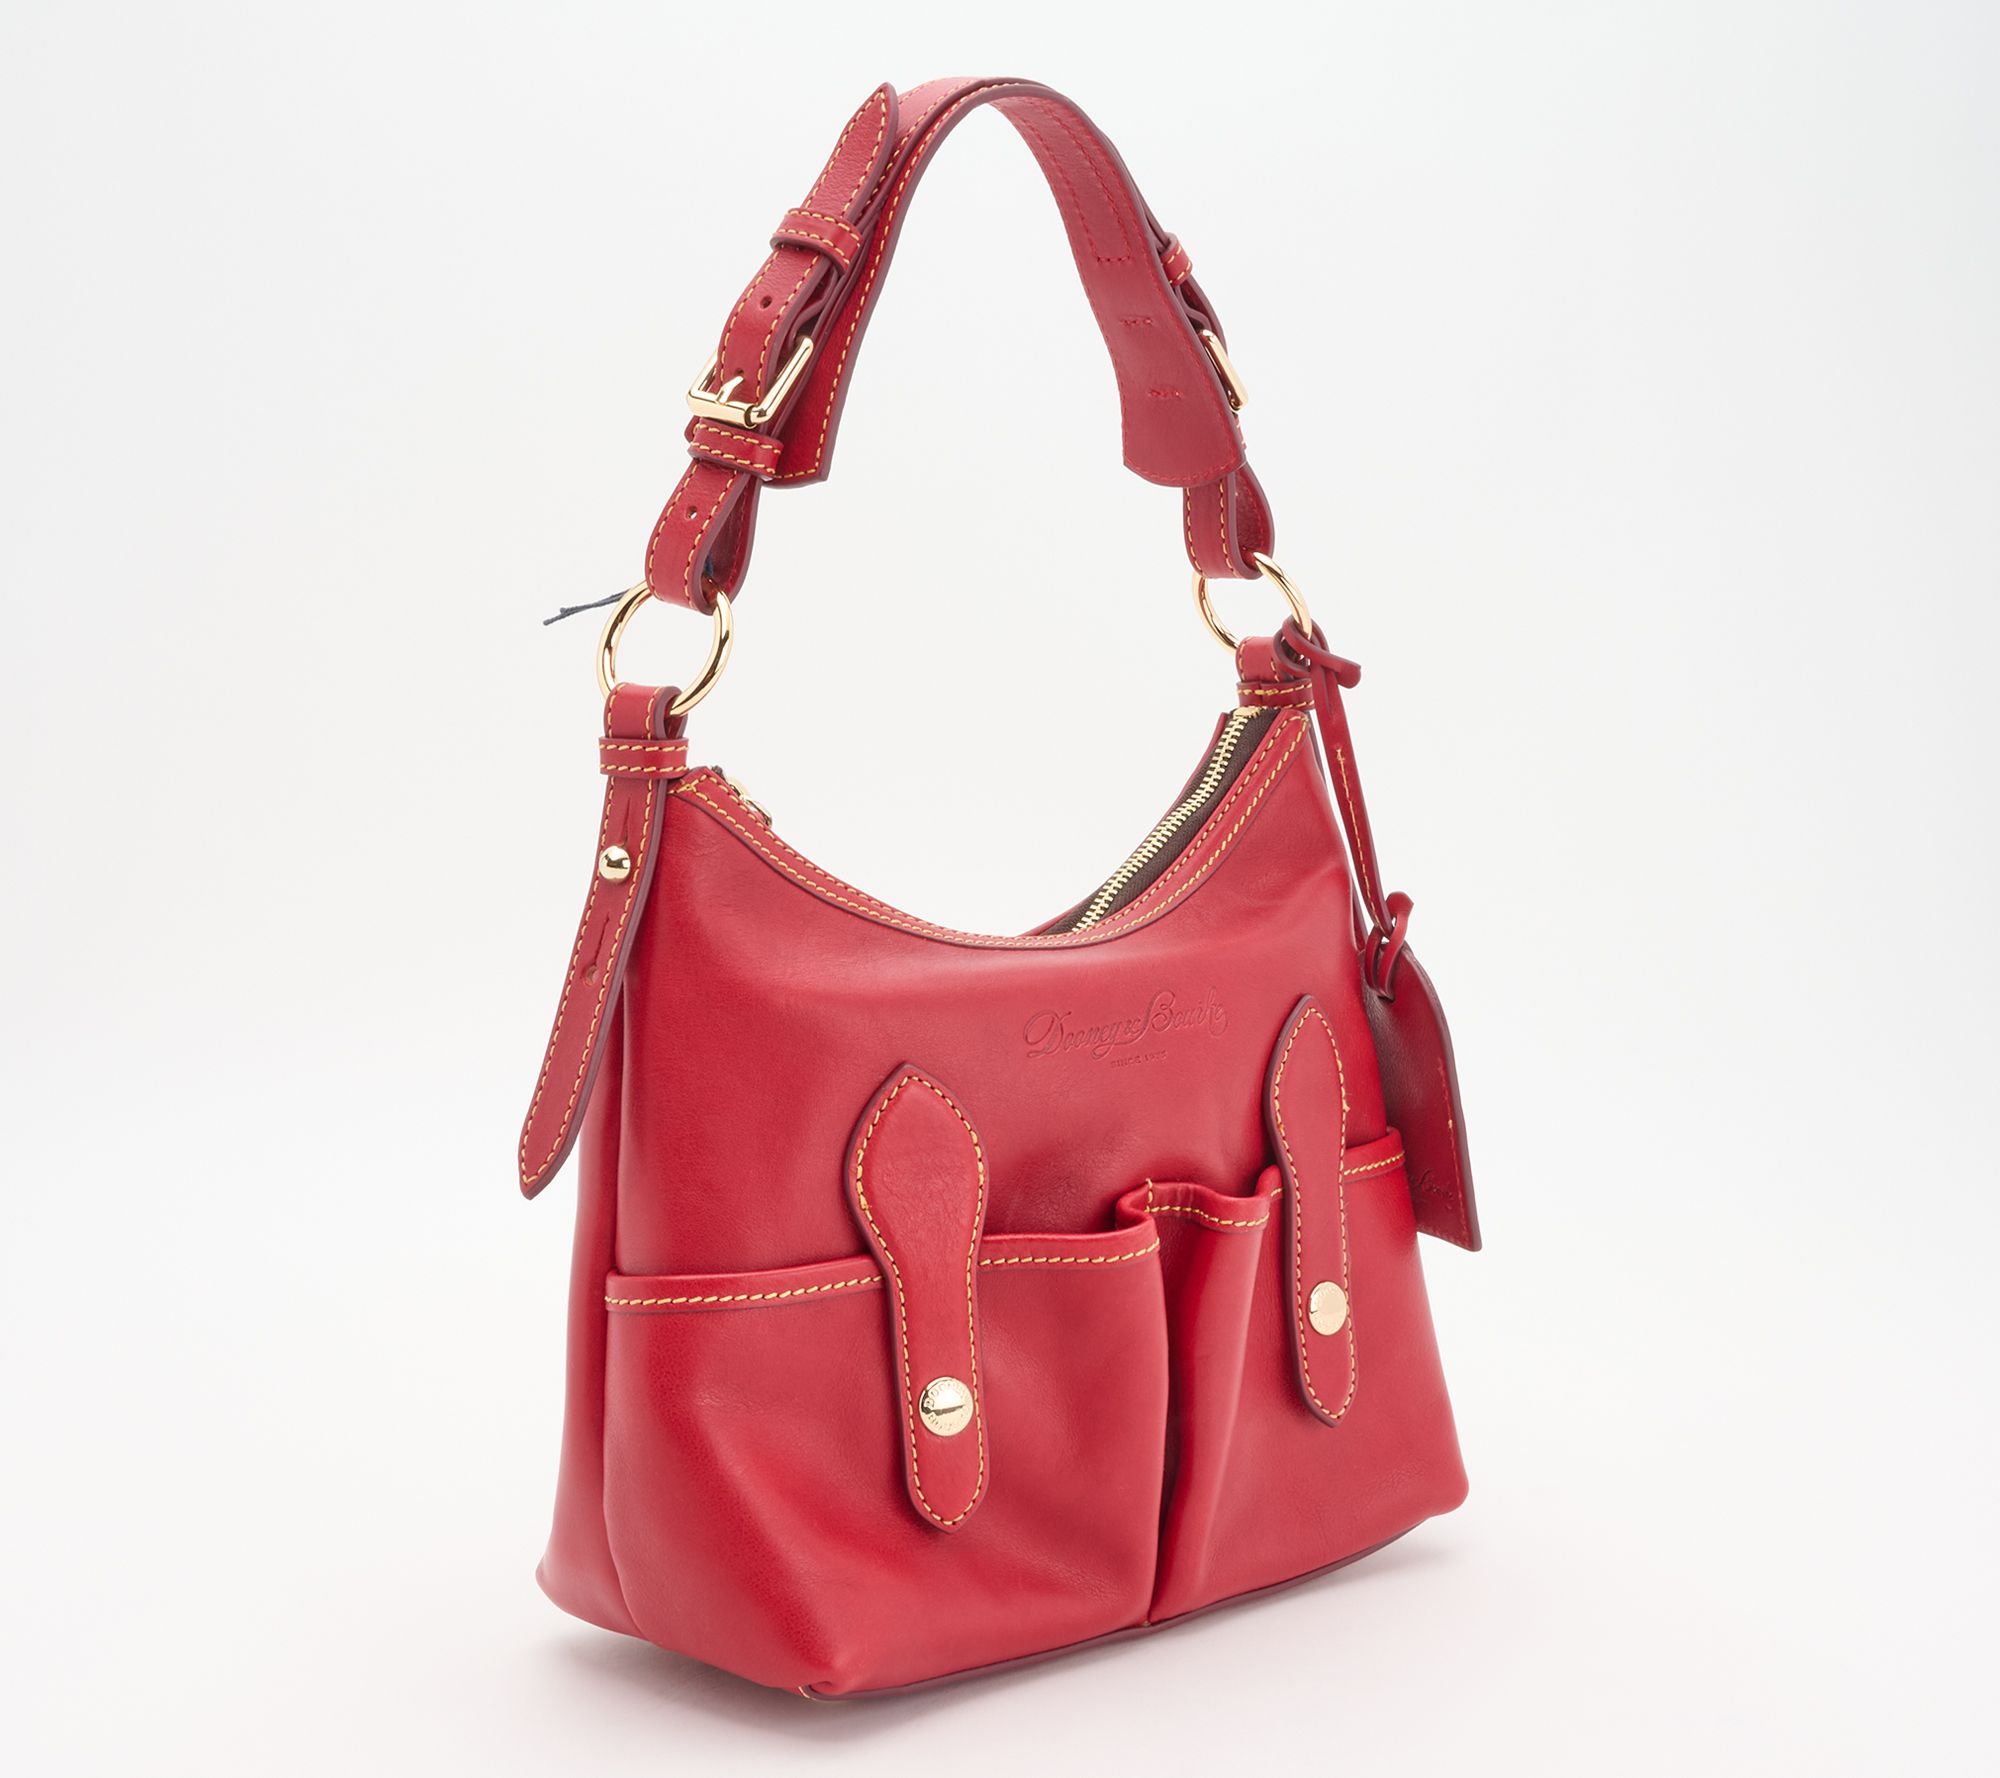 Dooney & Bourke Florentine Small Lucy Handbag